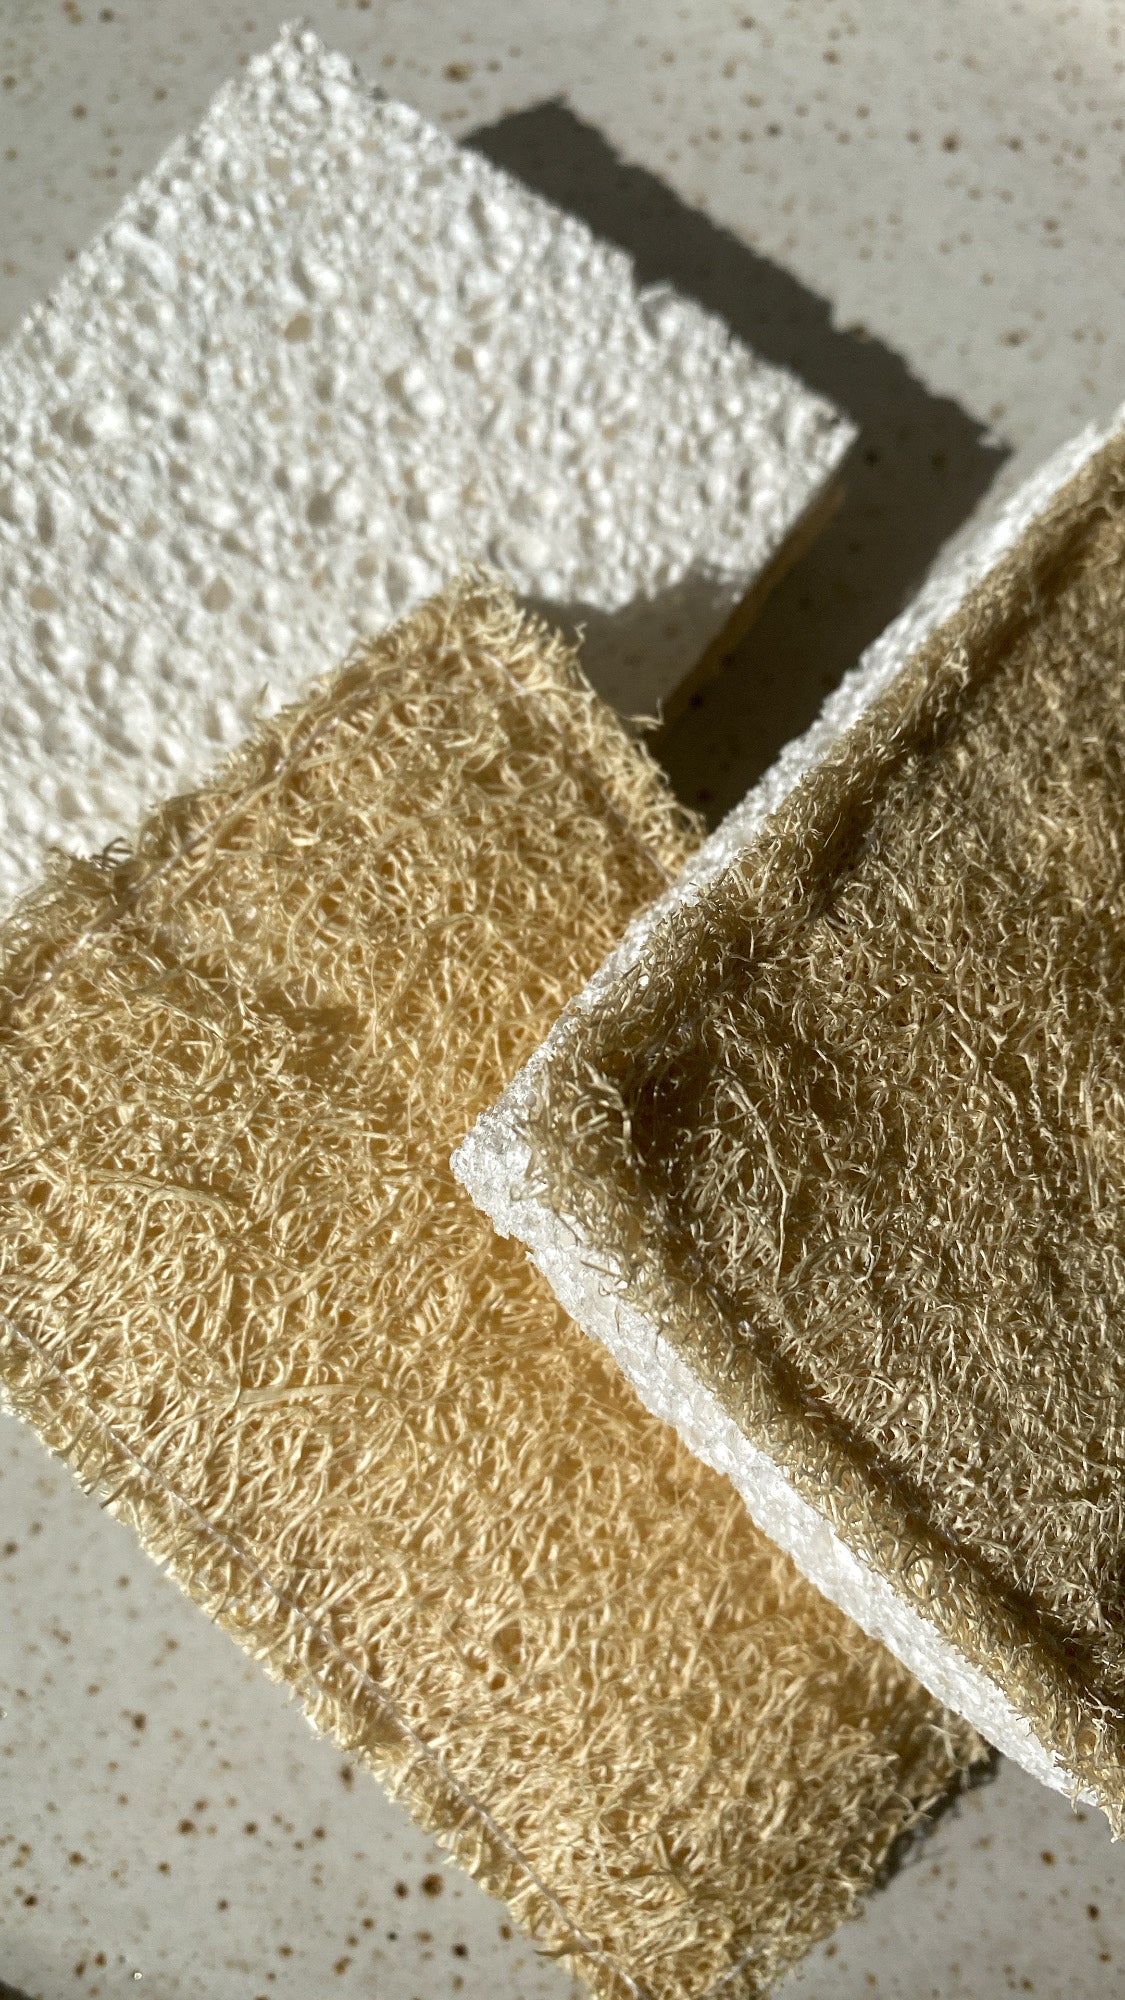 Loofah + Wood Pulp Scrubber Sponges